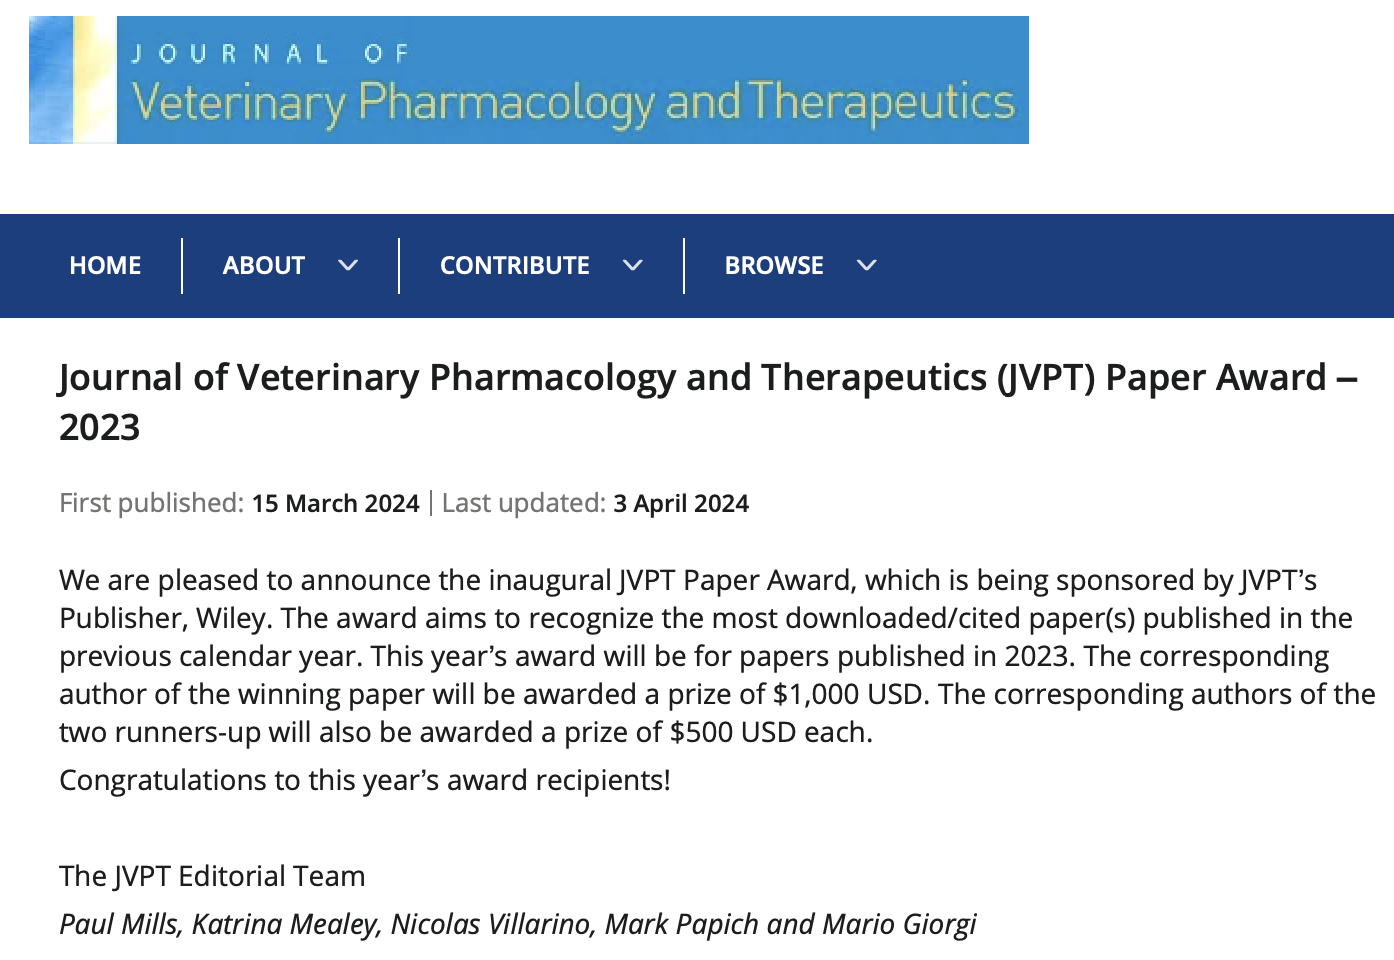 JVPT Paper Award - 2023